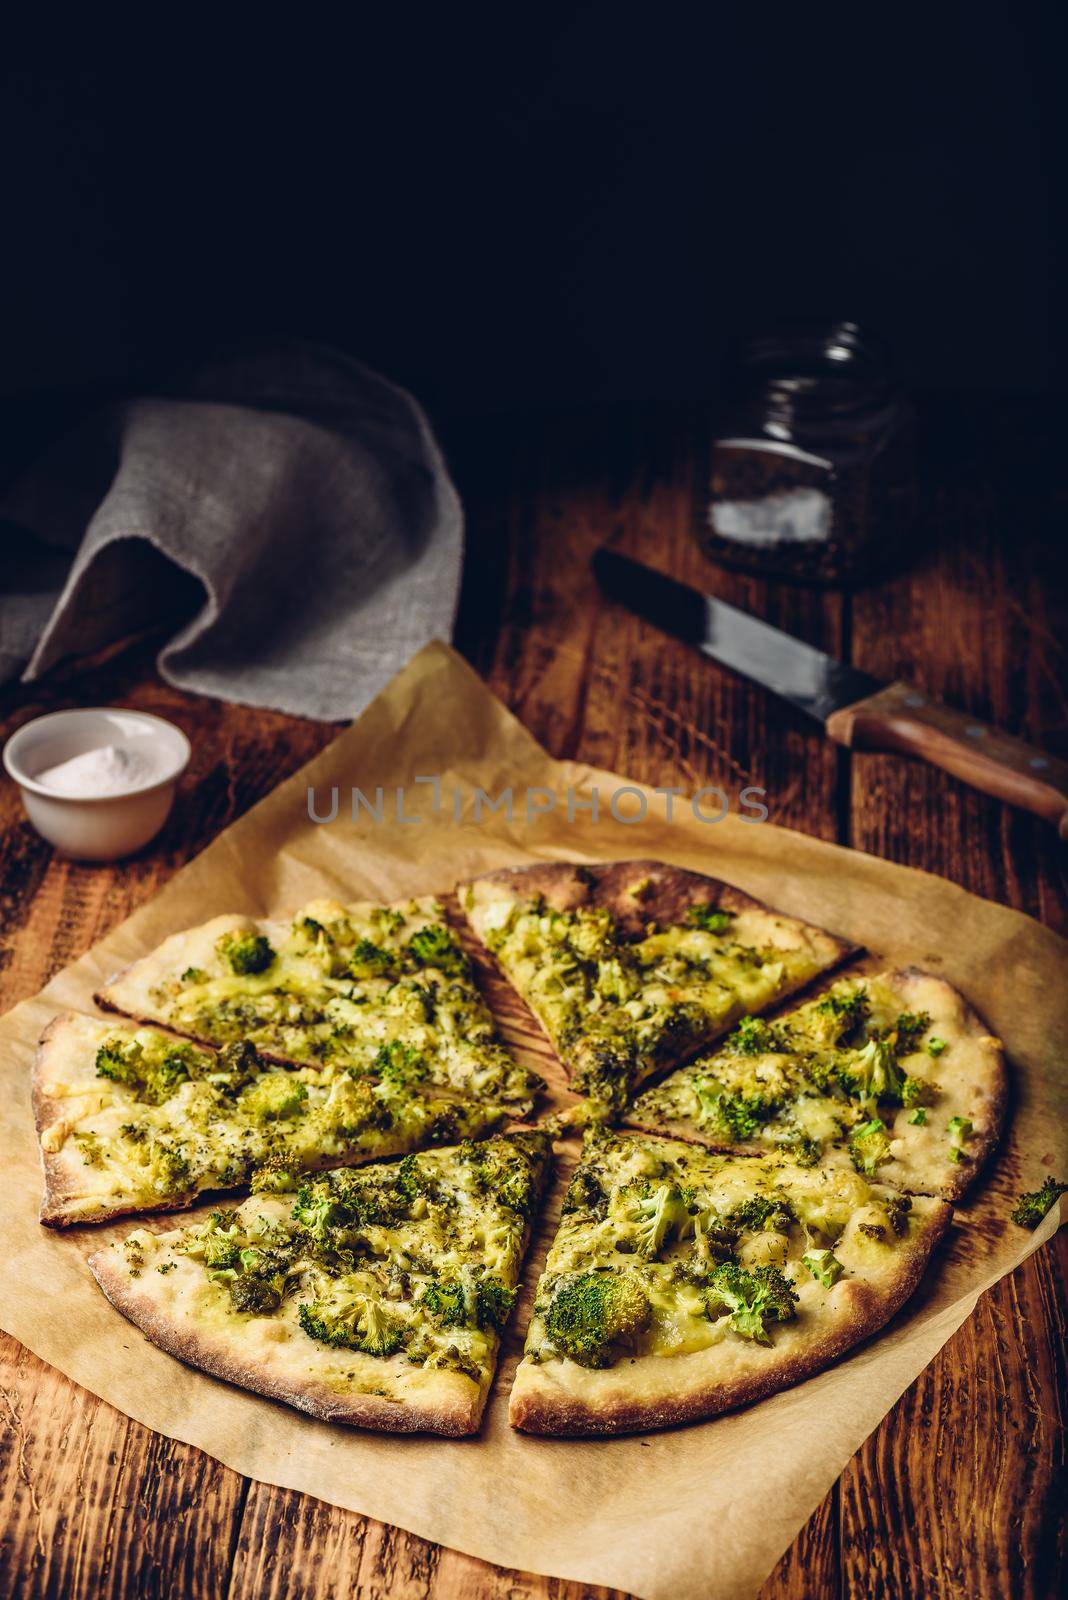 Sliced Italian pizza with broccoli and cheese by Seva_blsv